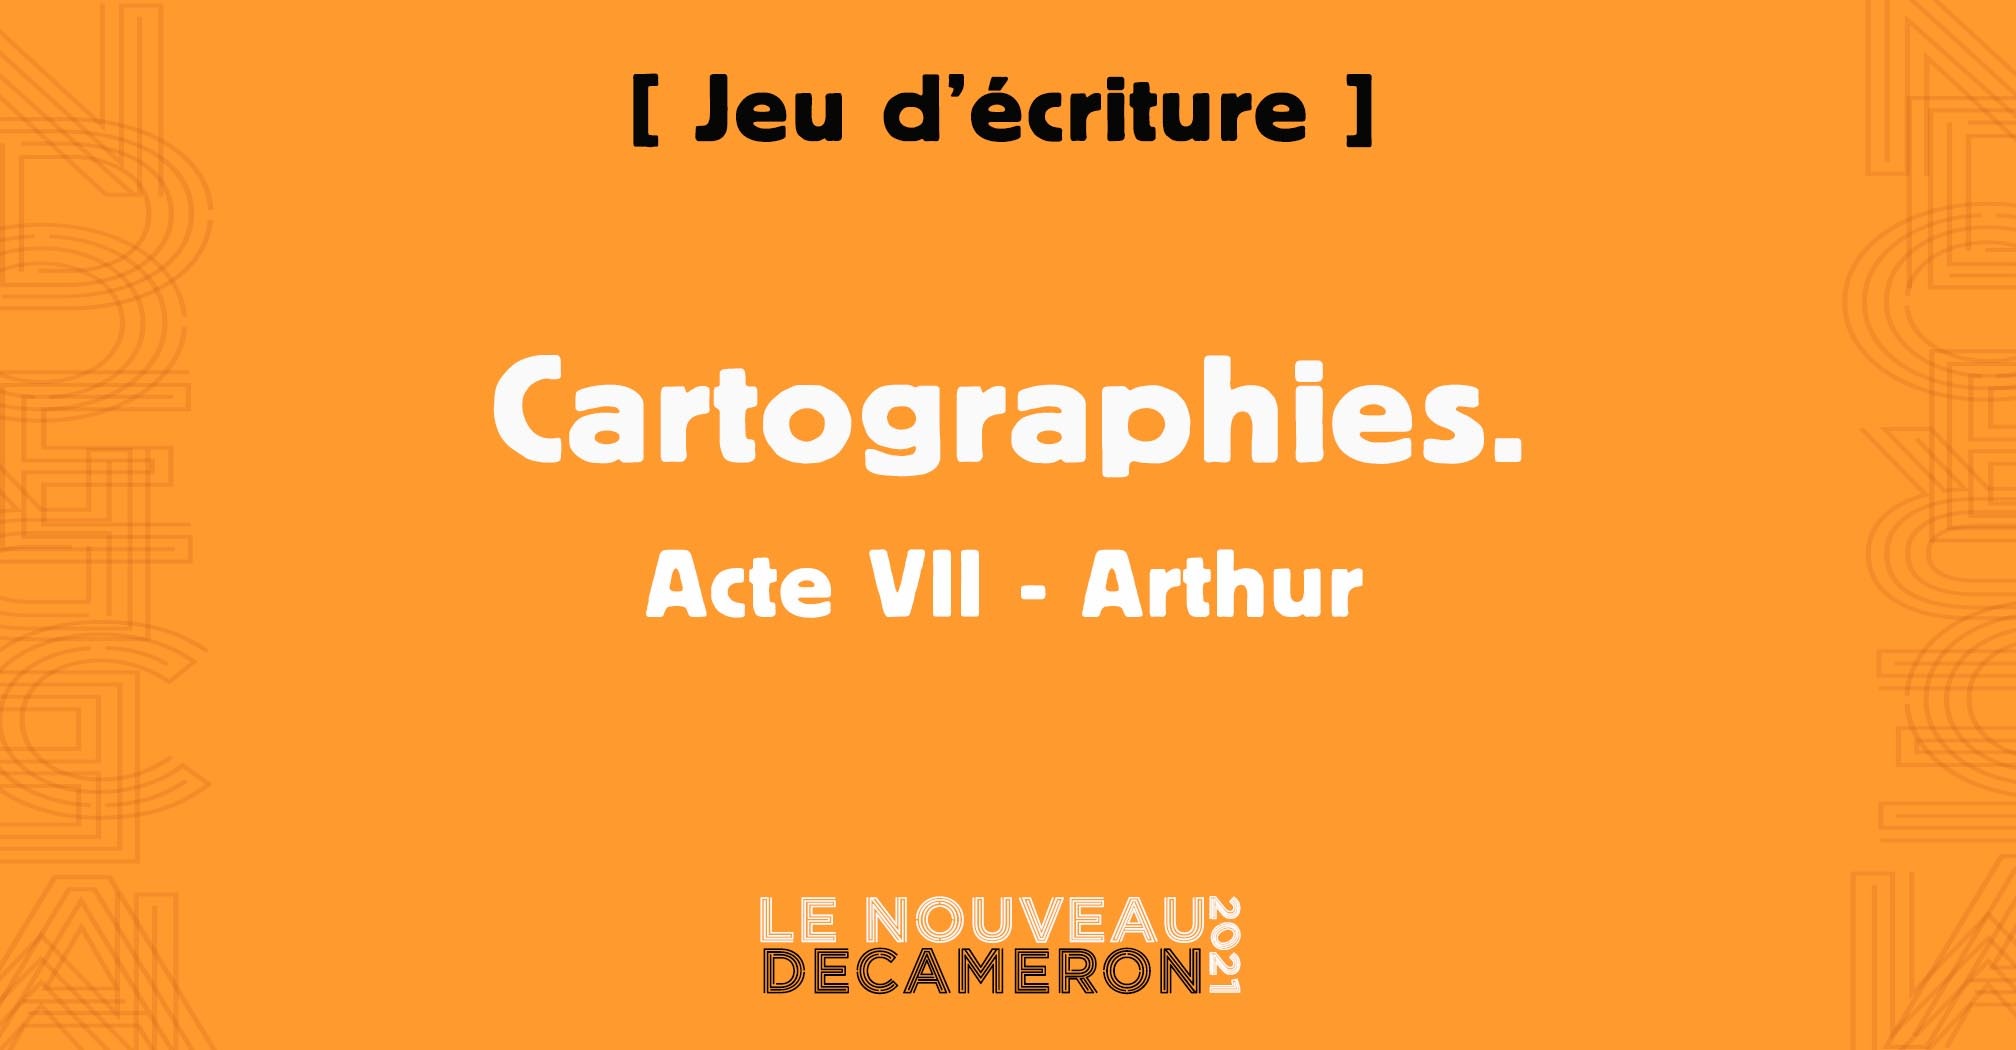 Cartographies. Acte VII - Arthur